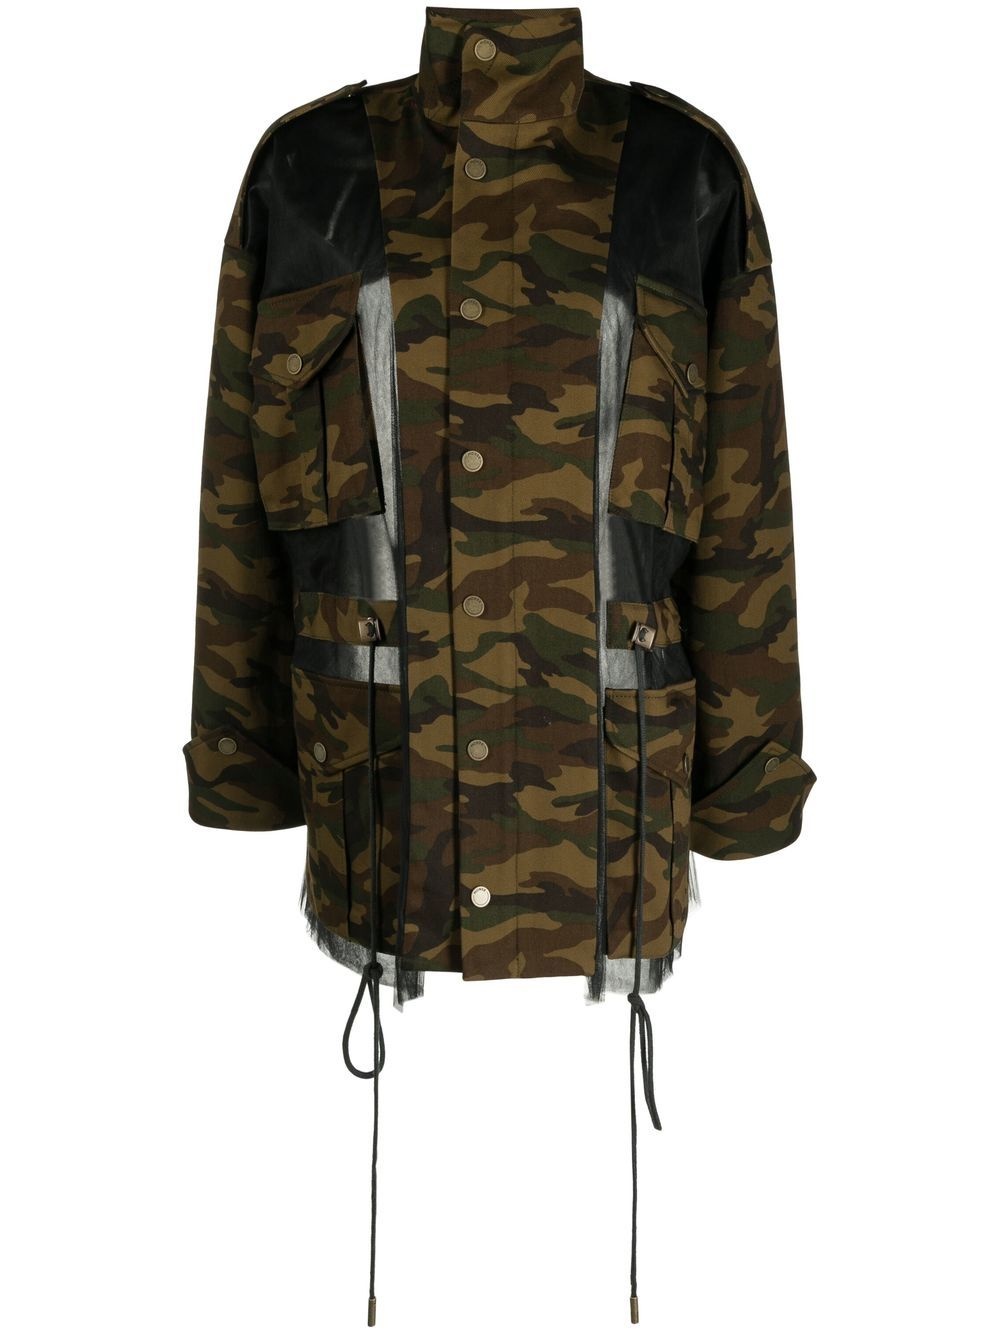 deconstructed camouflage jacket - 1